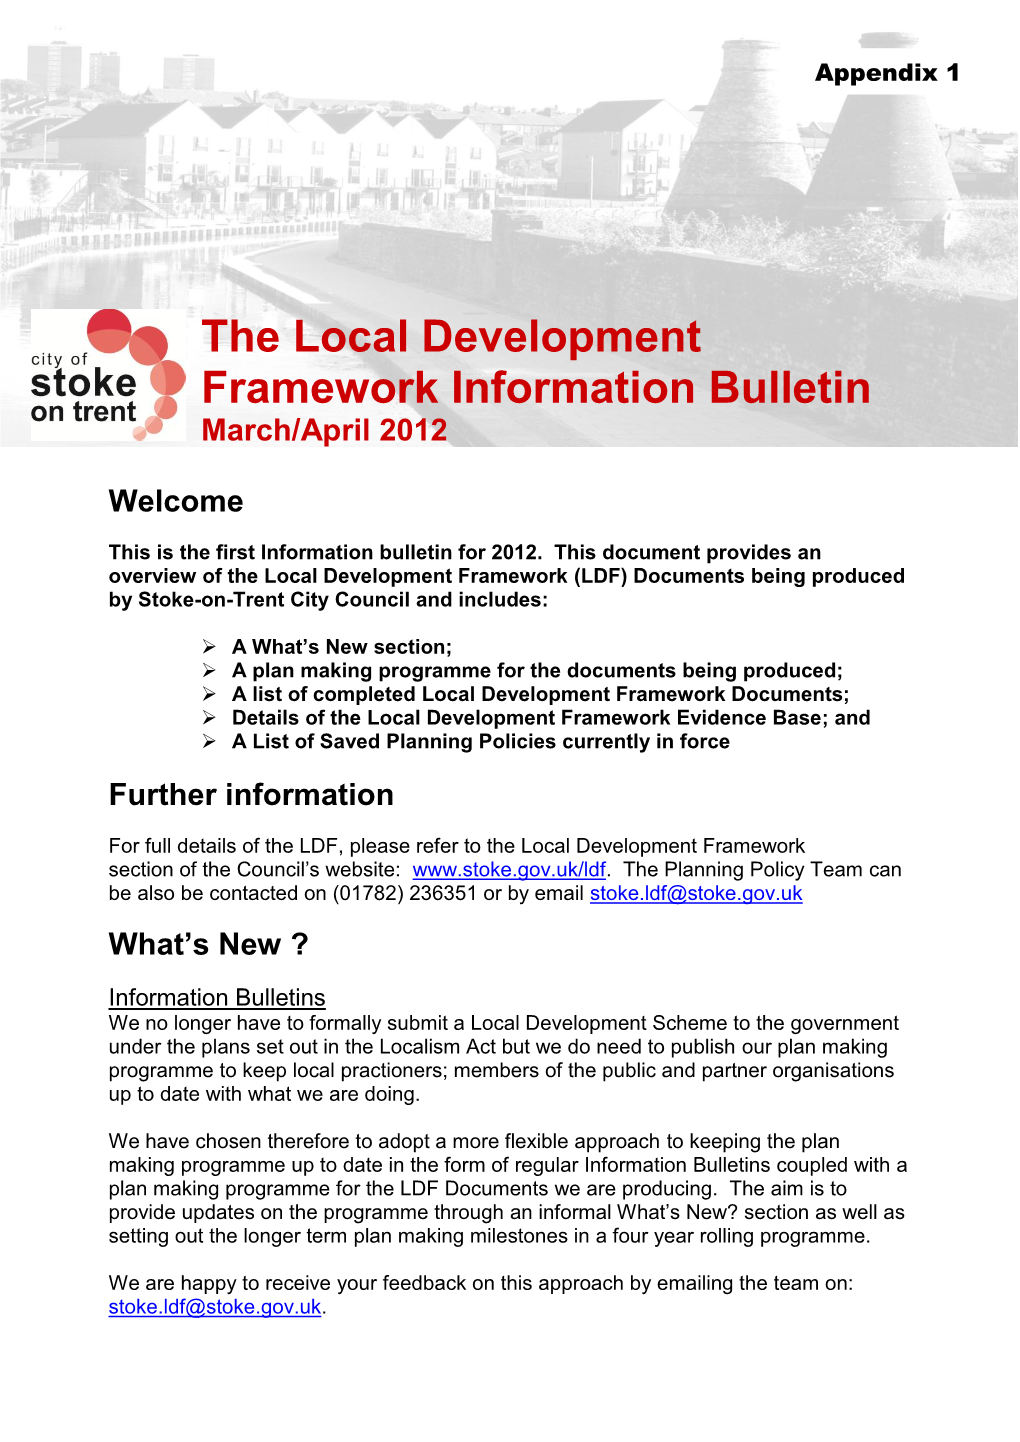 The Local Development Framework Information Bulletin March/April 2012